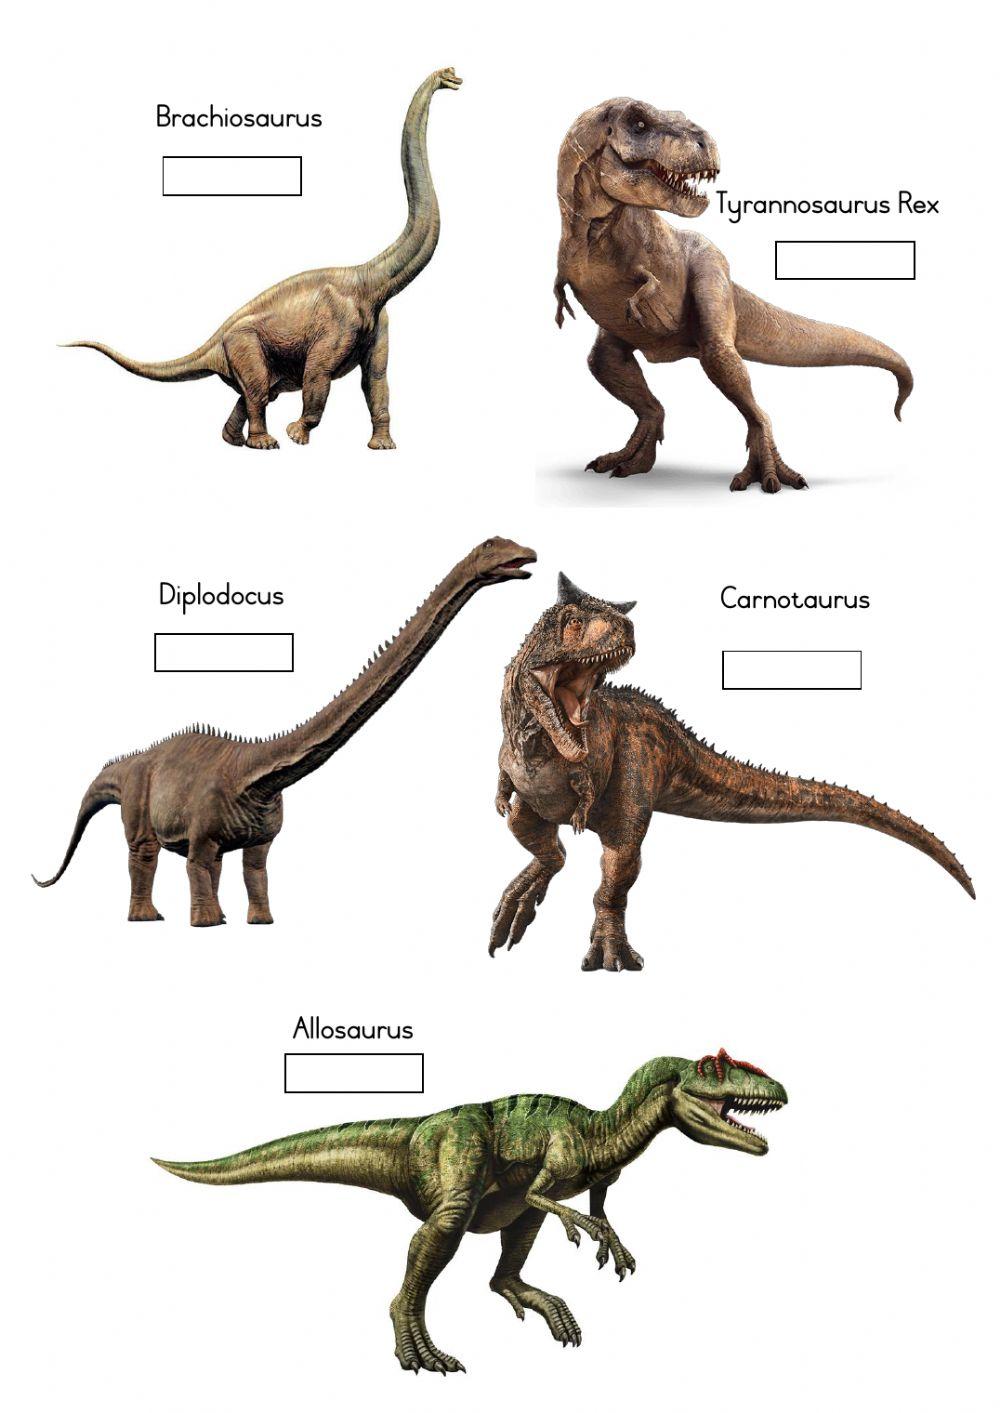 Theropod vs Sauropod